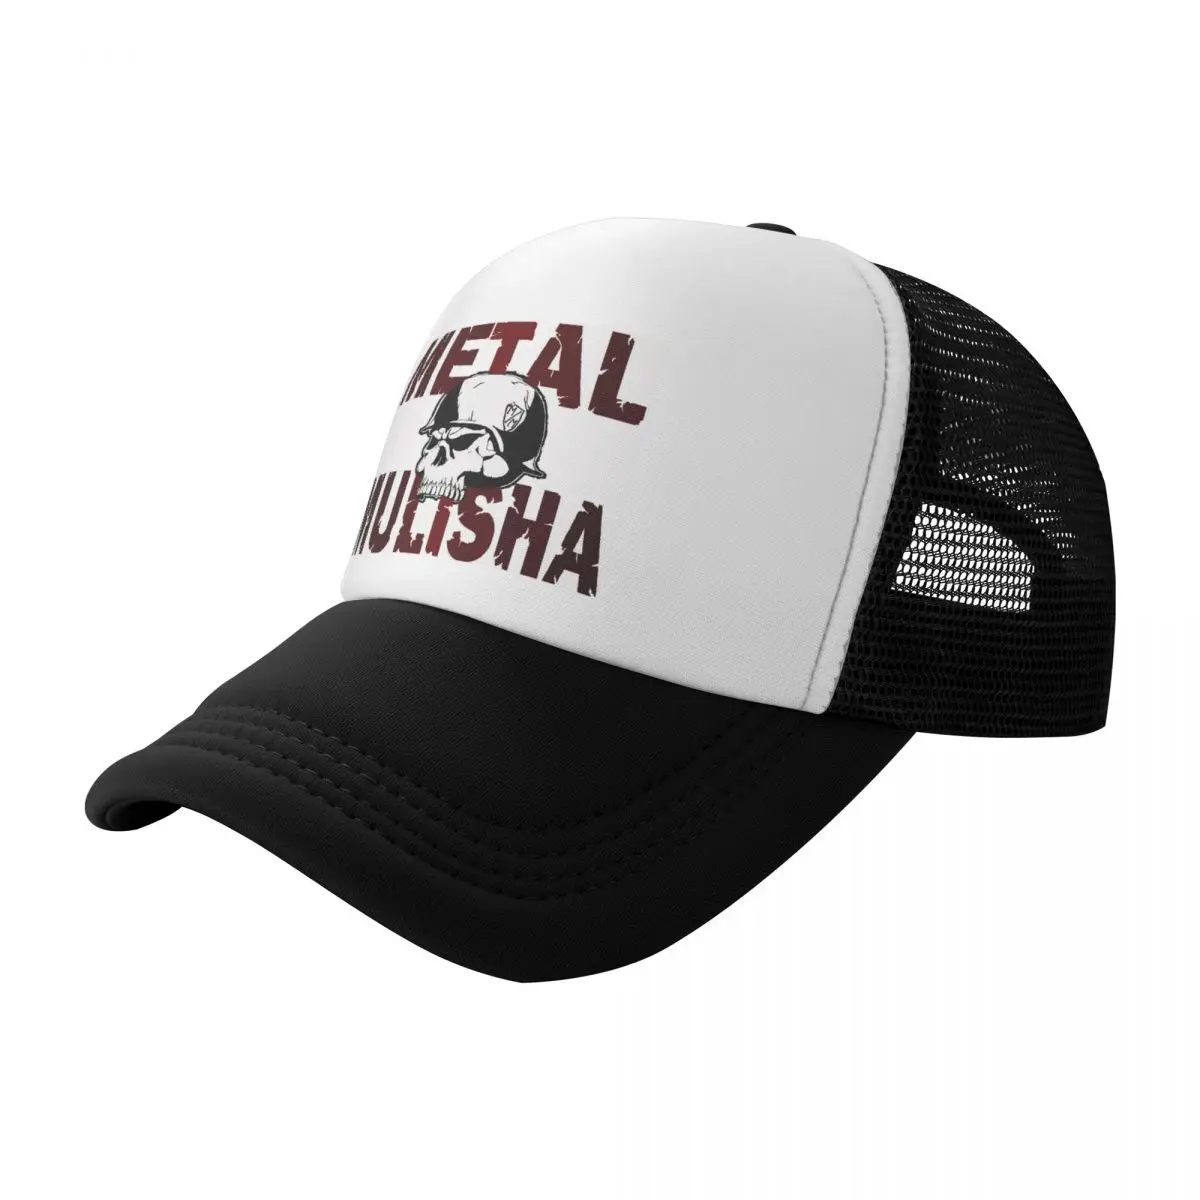 

Mulisha Og Baseball Cap Hip Hop Cap Adjustable Fashion Men's and Women's Summer Breathable Cap Casual Sunshade Hat